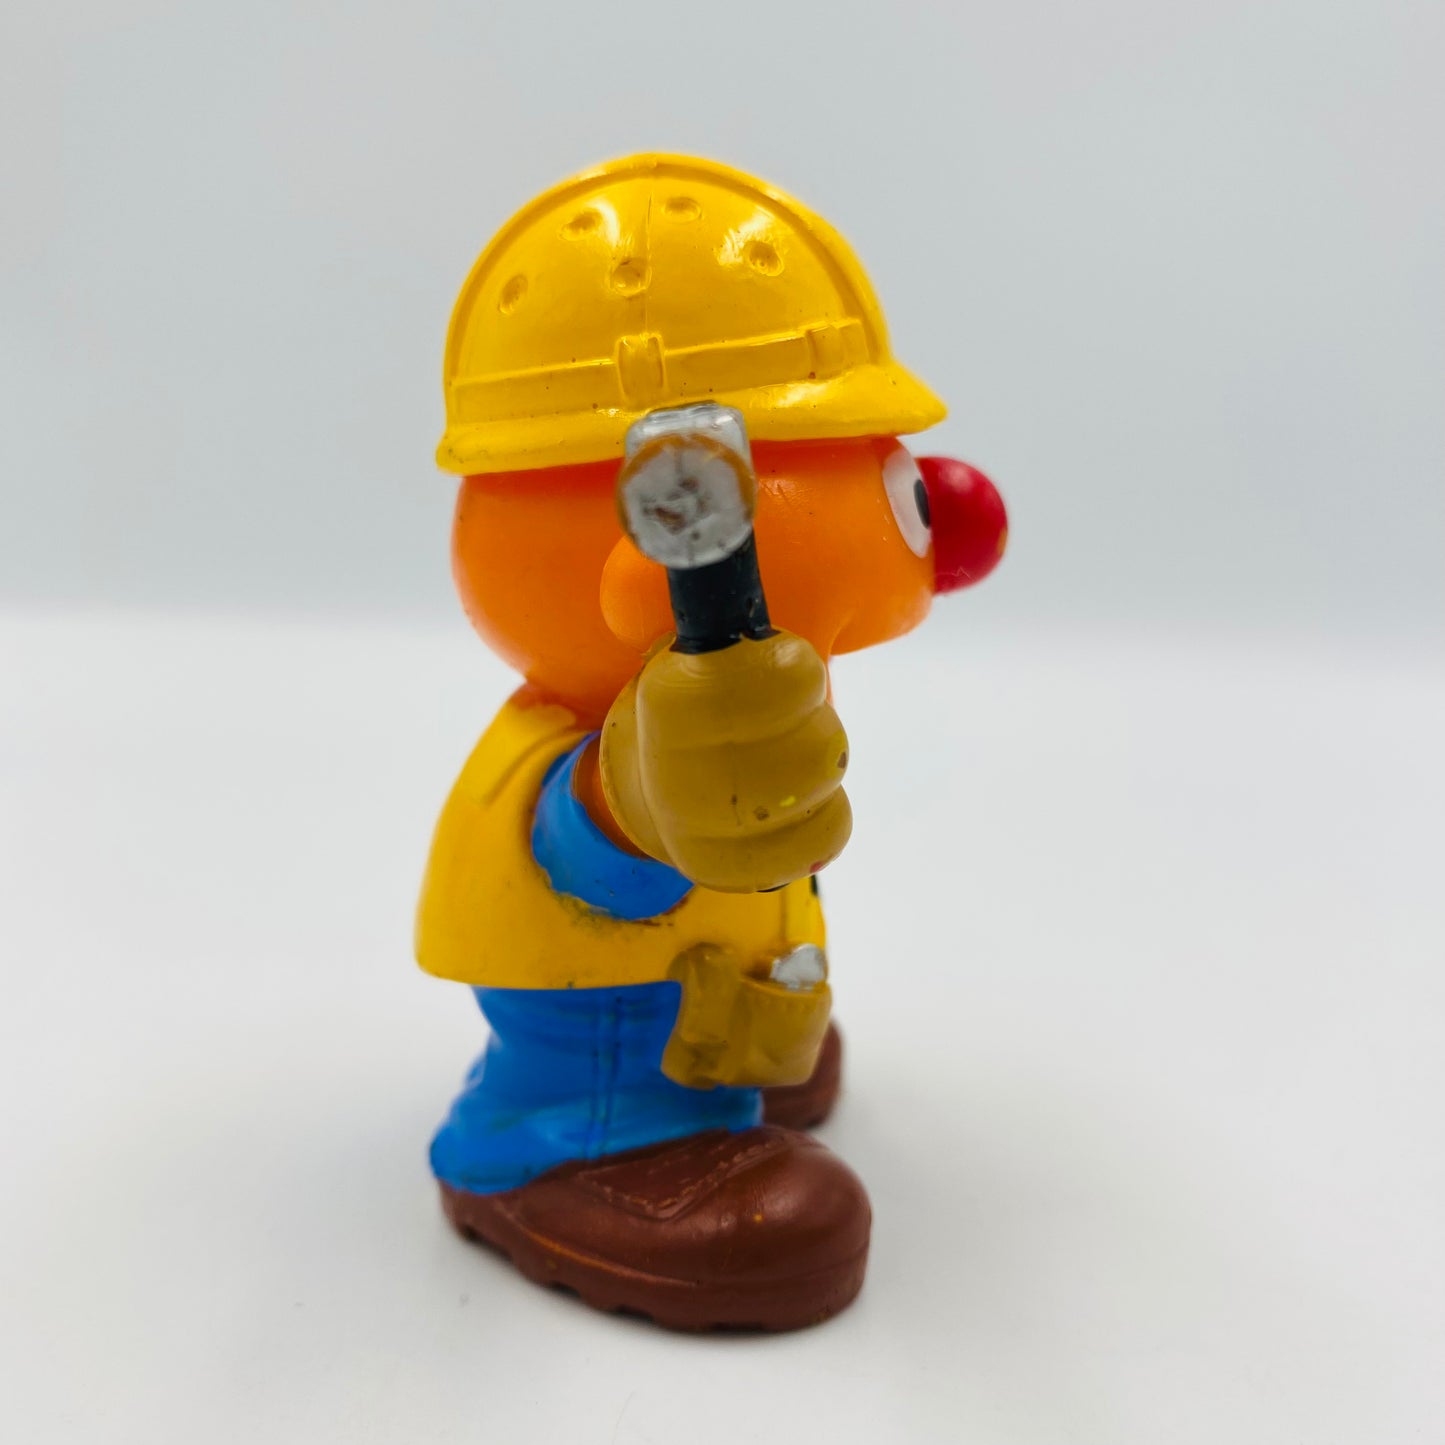 Playskool Sesame Street Construction Worker Ernie loose figurine (2012) Hasbro